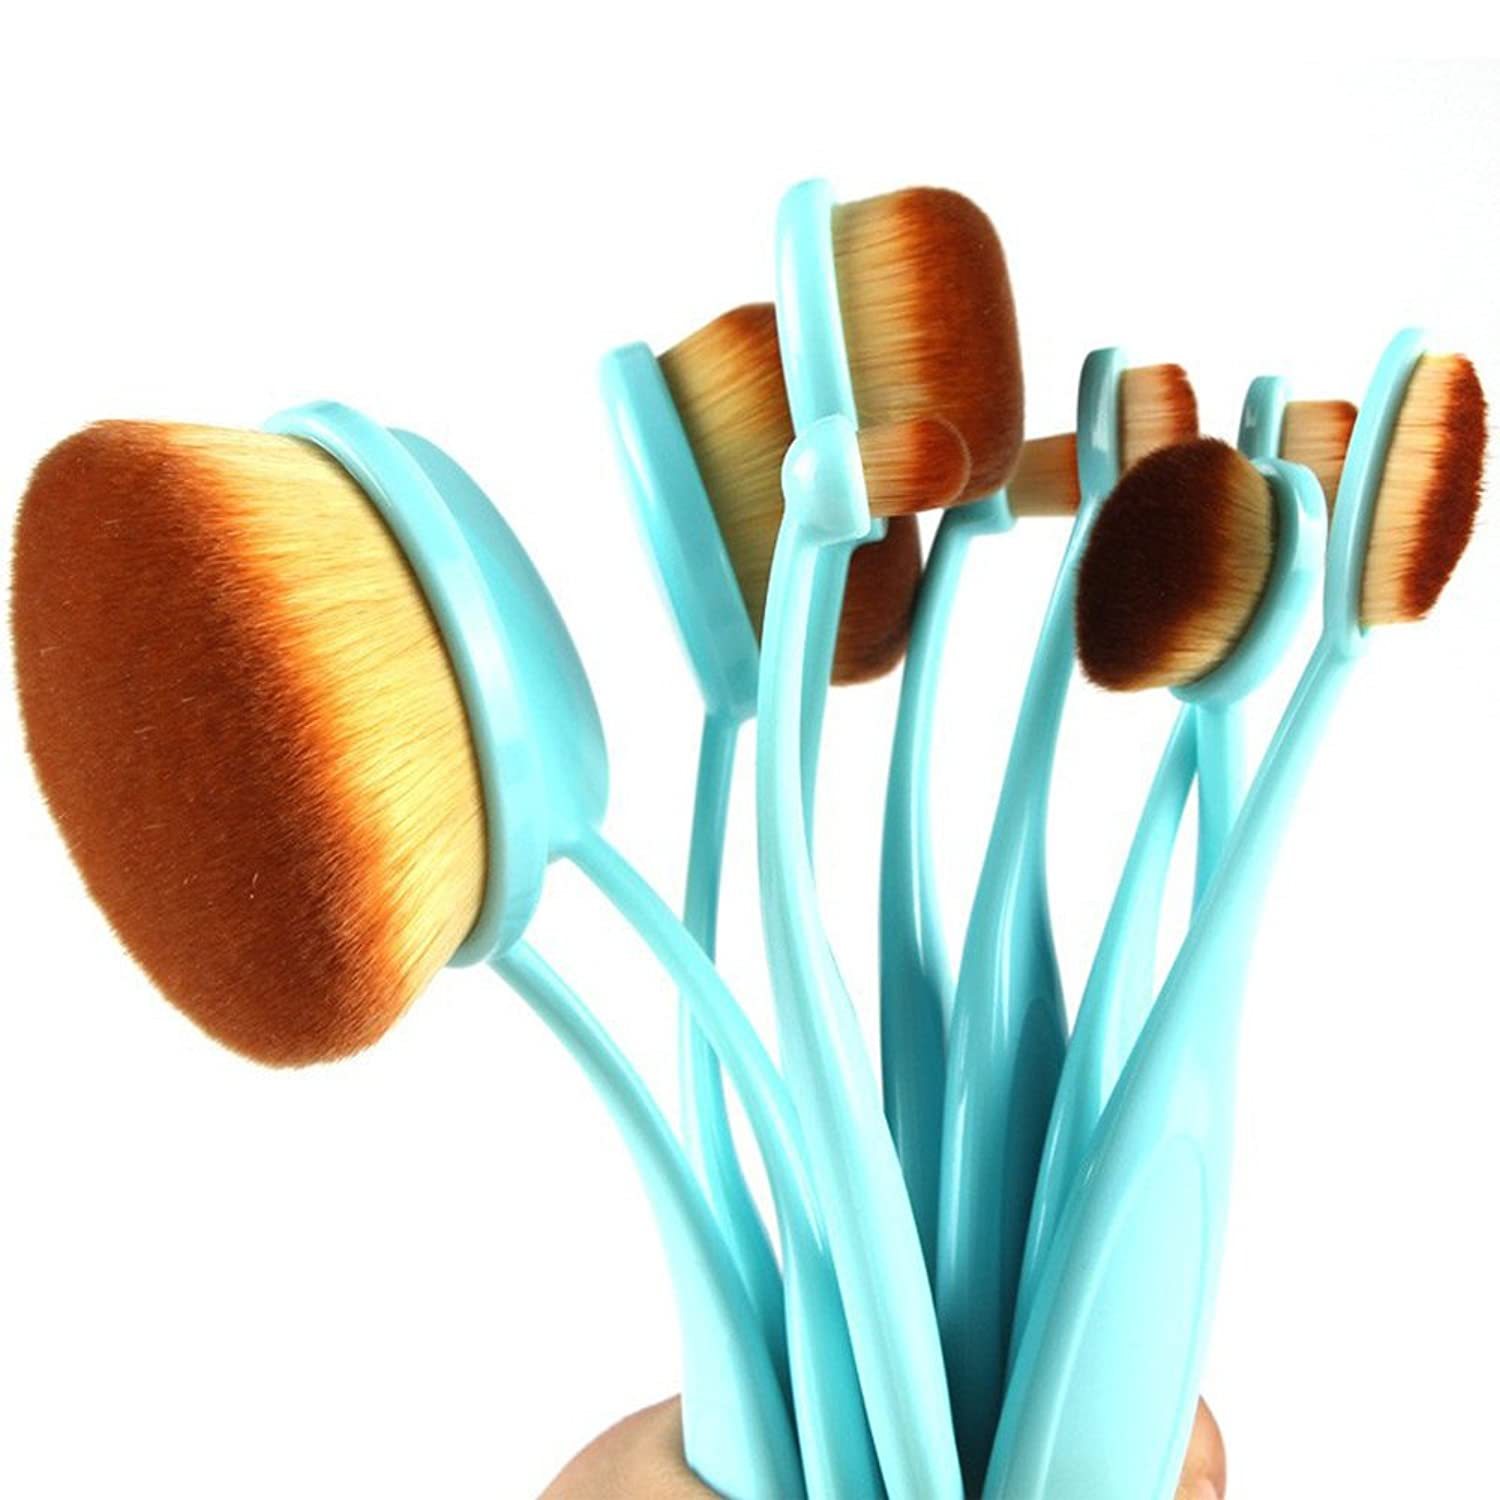 New Oval Toothbrush Makeup Brush Set Foundation Brushes Powder Blush Conce